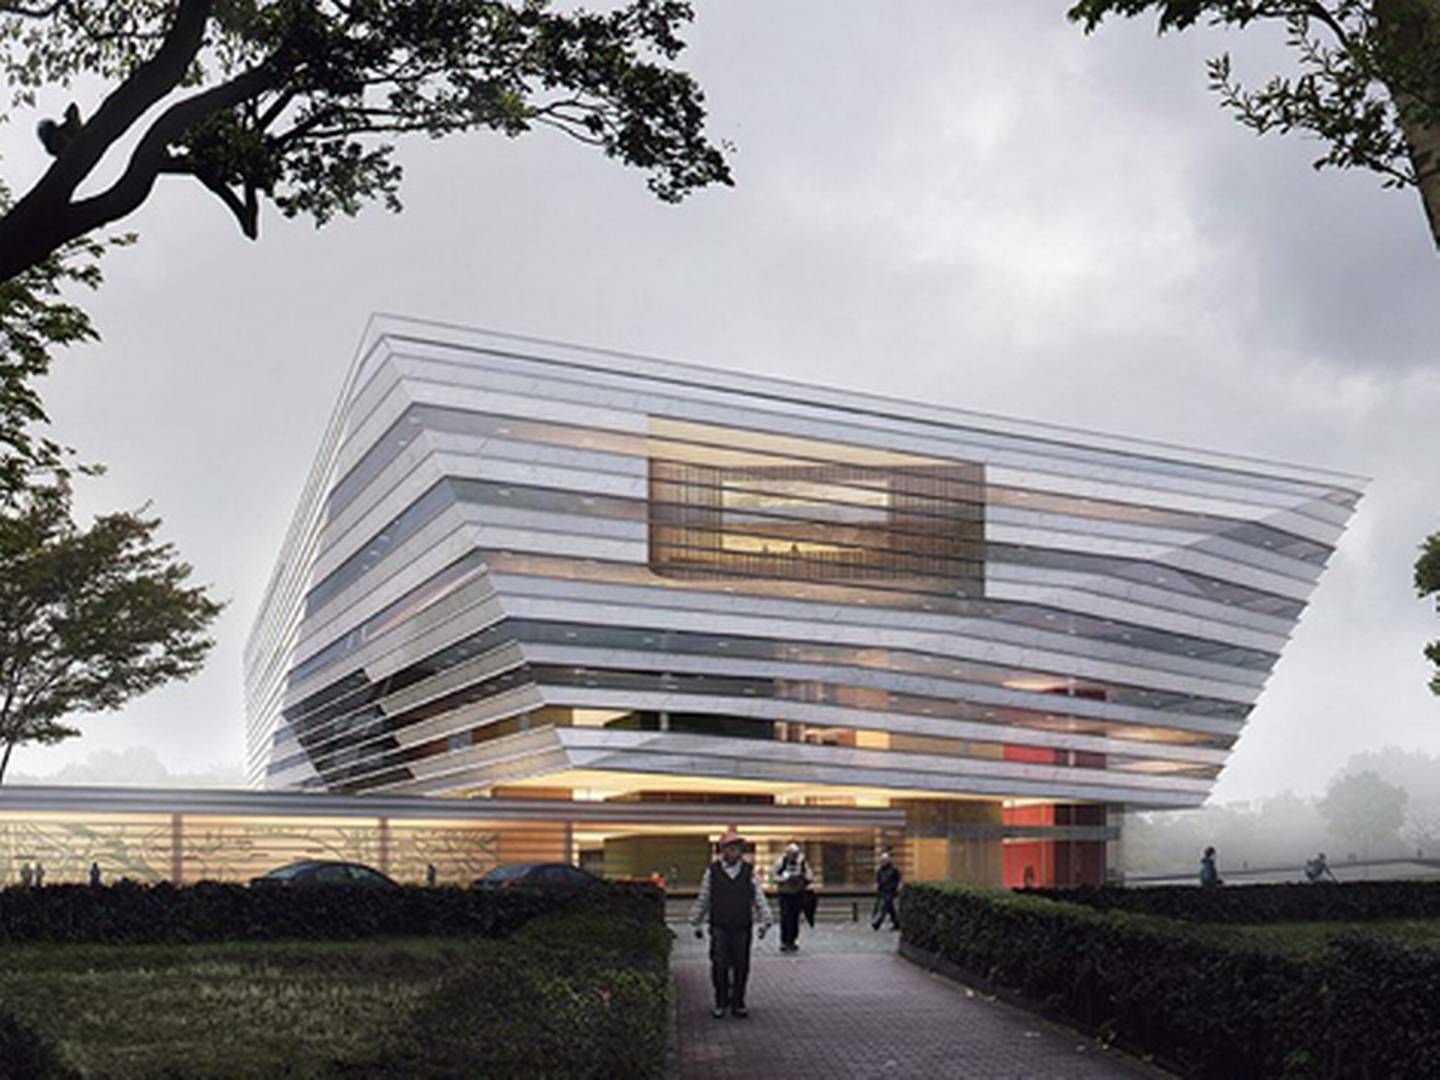 Det 110.000 kvm store bibliotek i Kina er blandt de opgaver, som Schmidt Hammer Lassen har vundne. | Foto: Schmidt Hammer Lassen